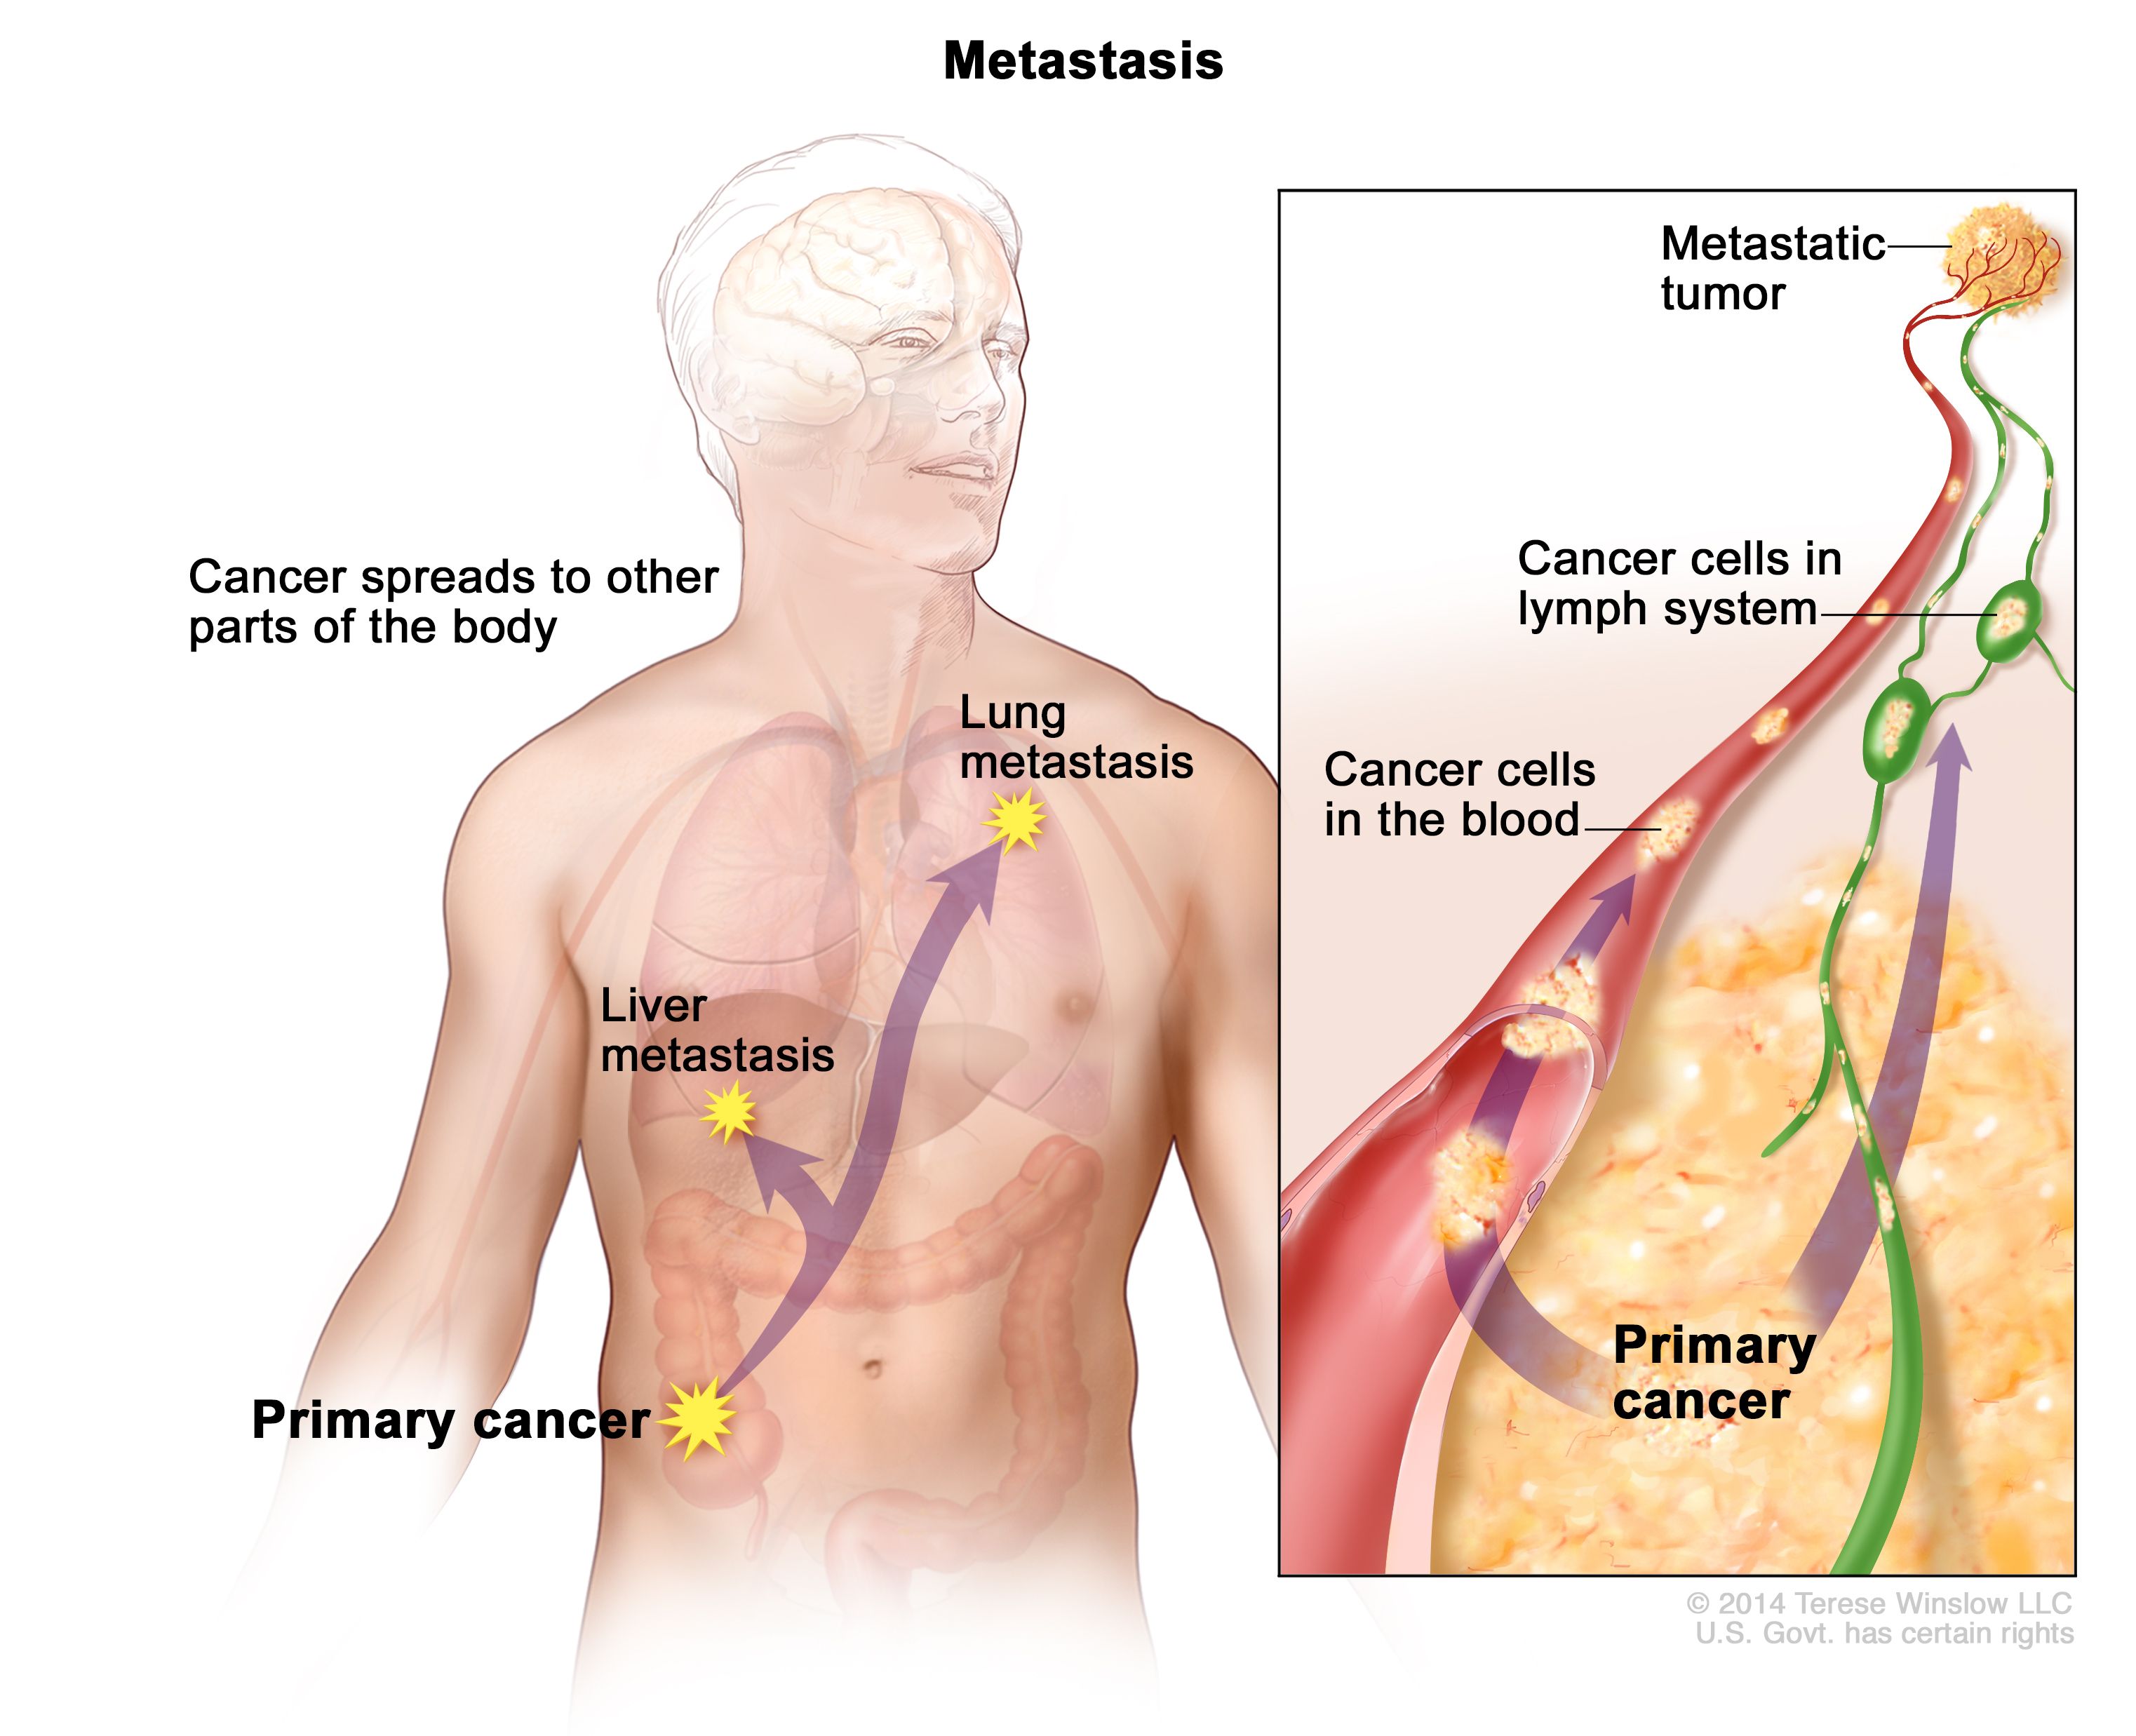 metastatic cancer meaning in bengali metastatic cancer ka ilaj